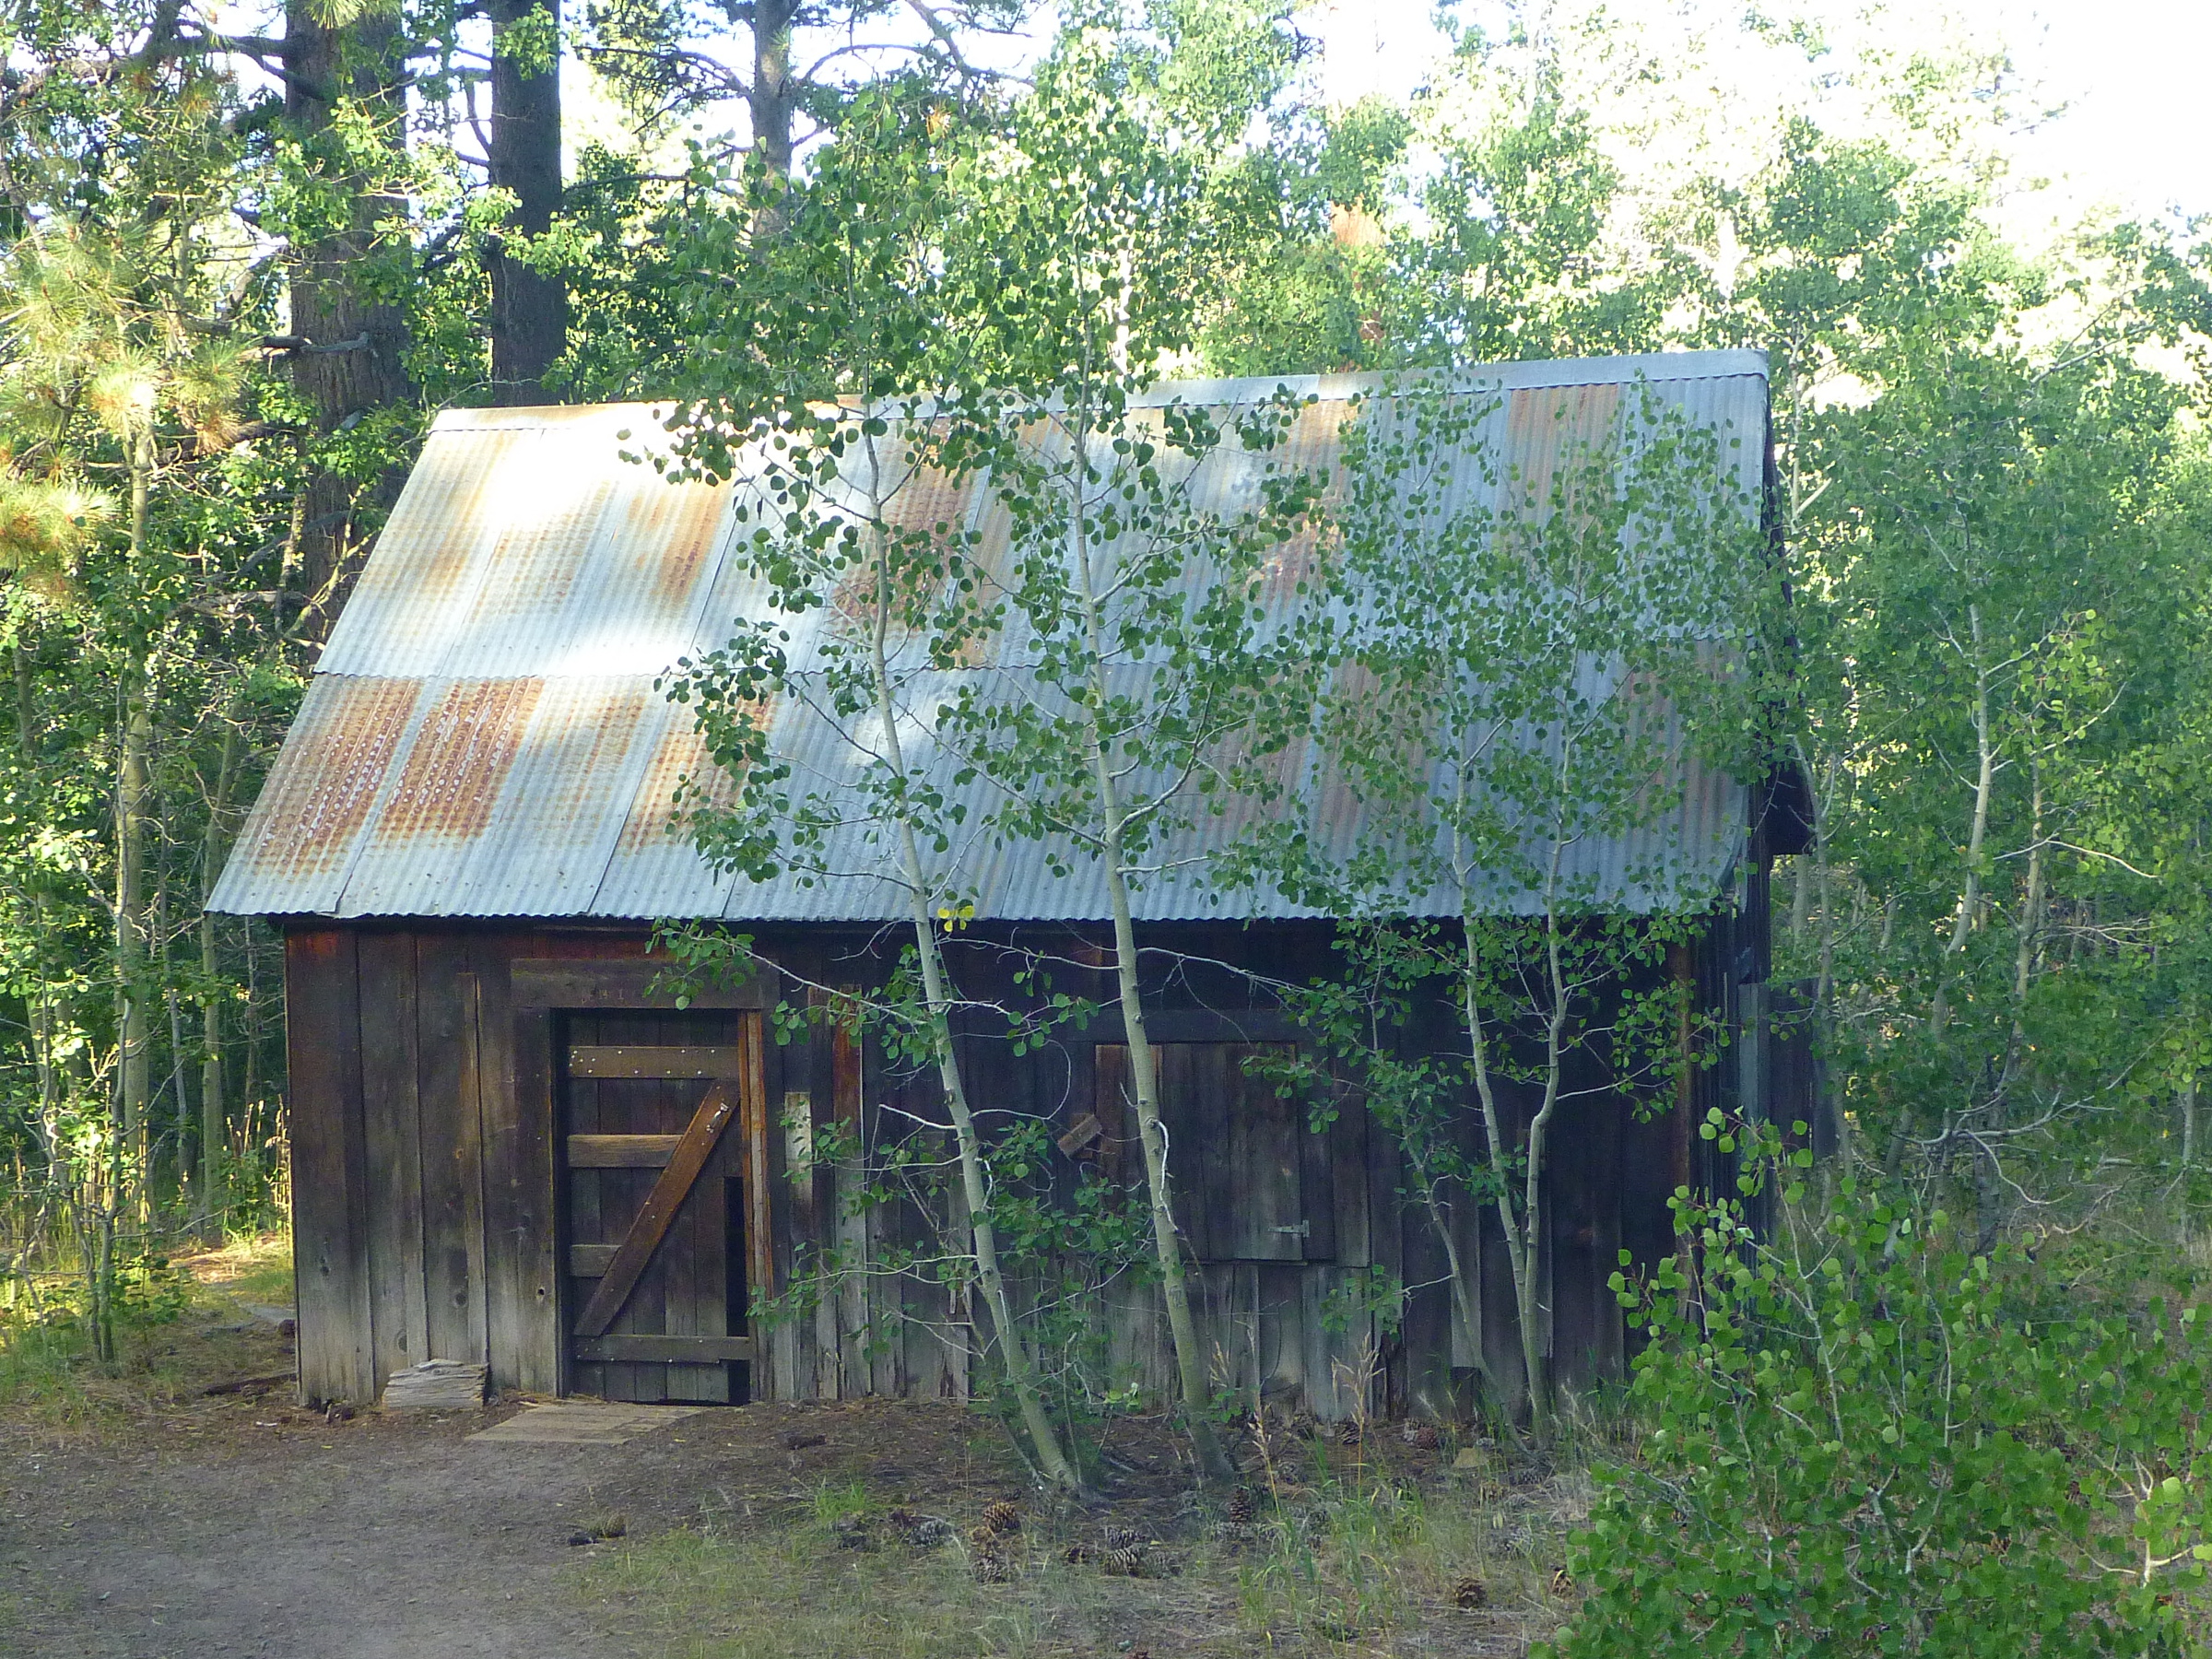 Spencer's Cabin